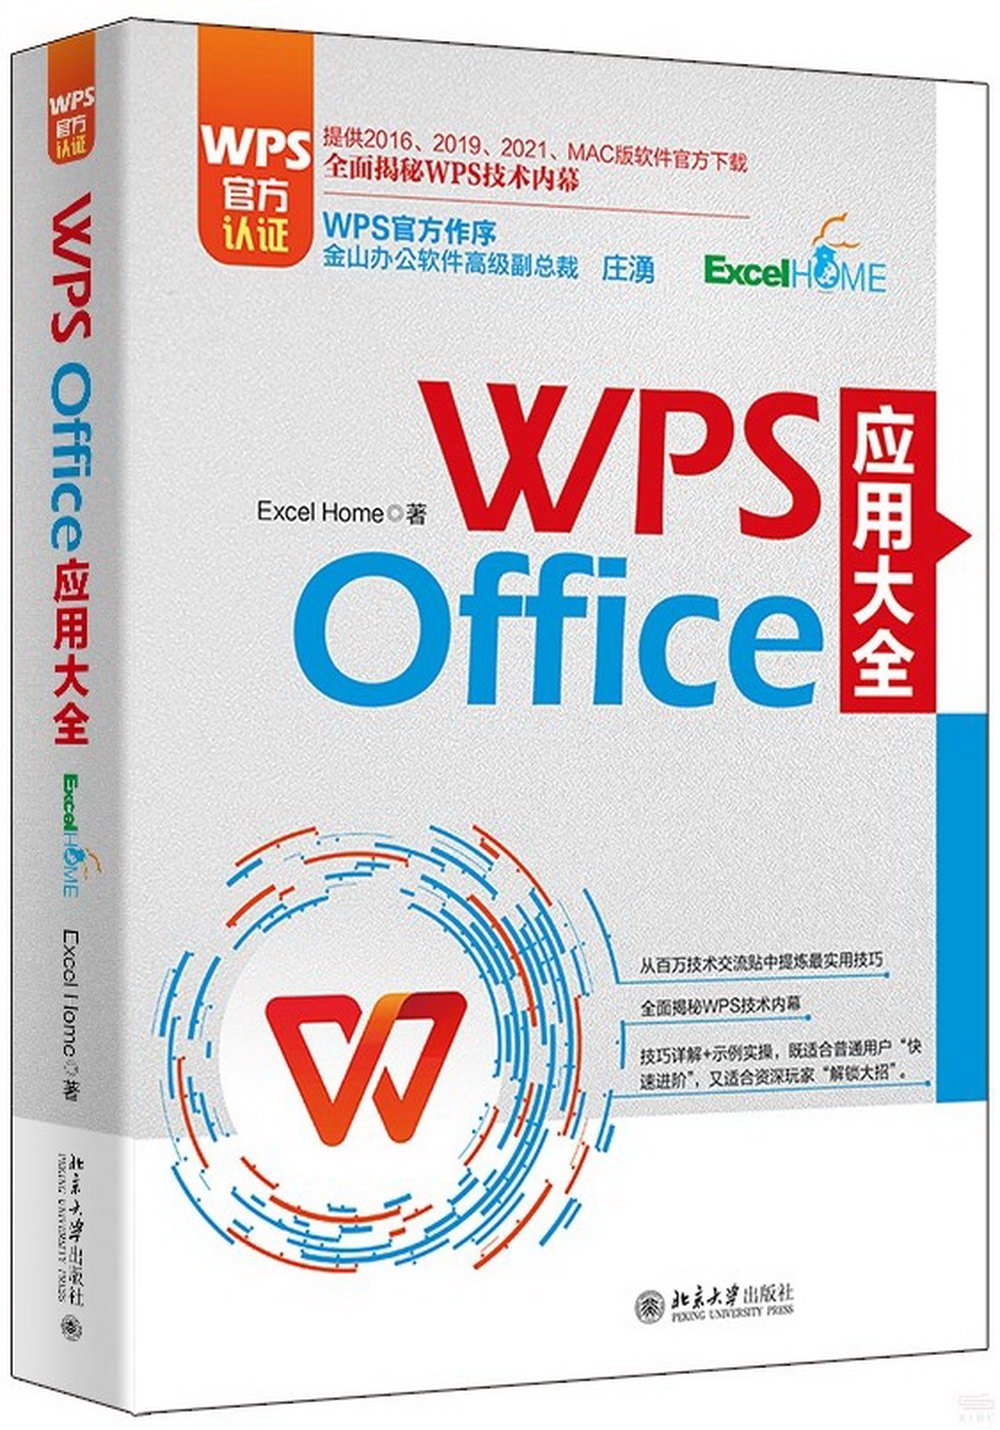 WPS Office 應用大全